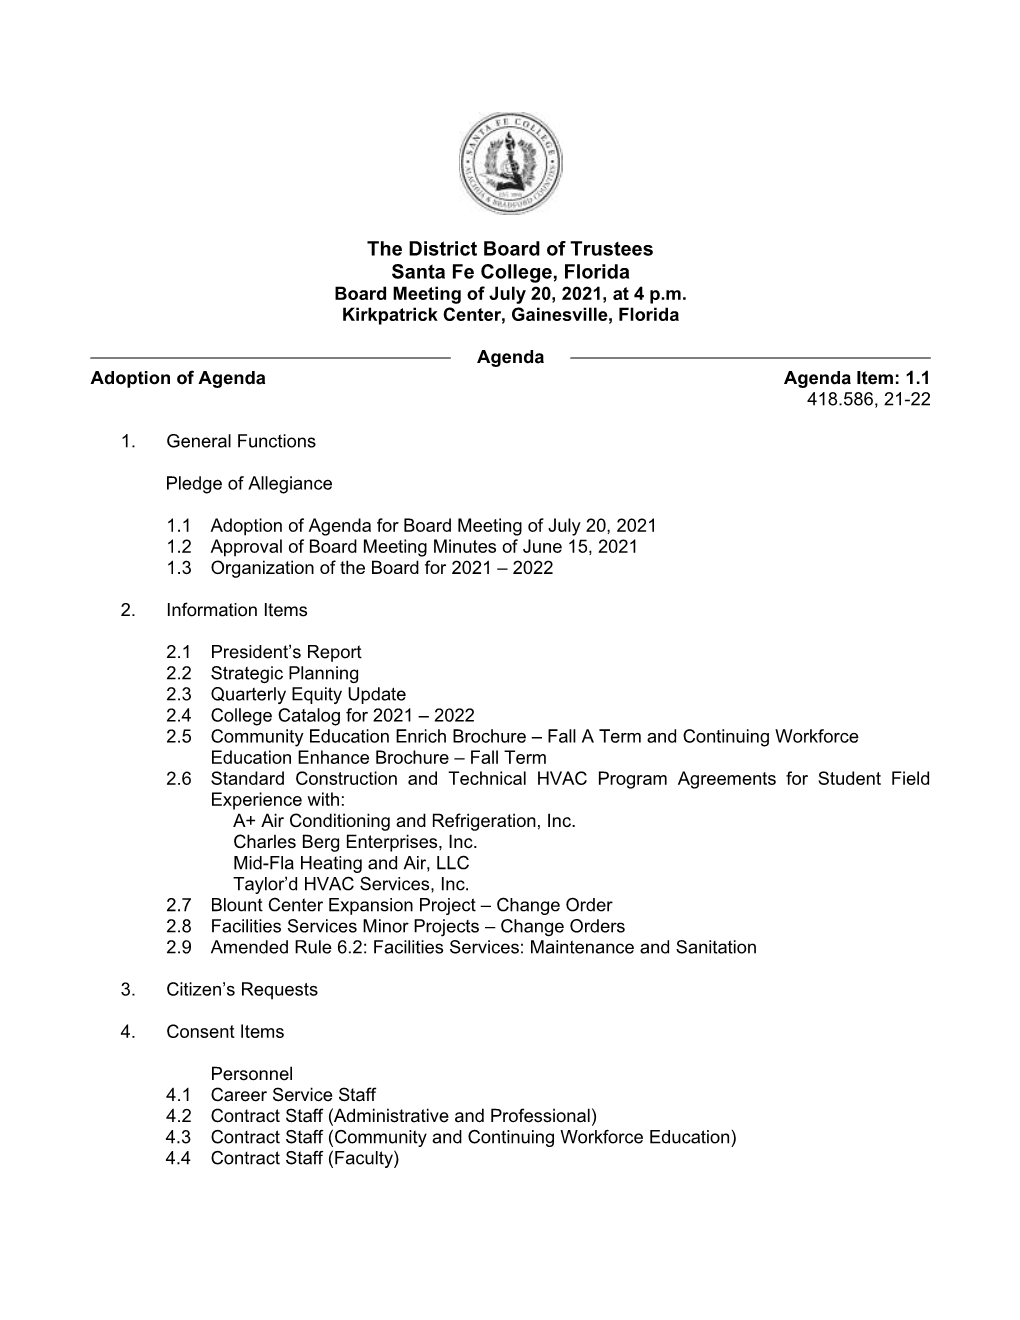 07-2021 Agenda.Pdf (Opens in New Window)